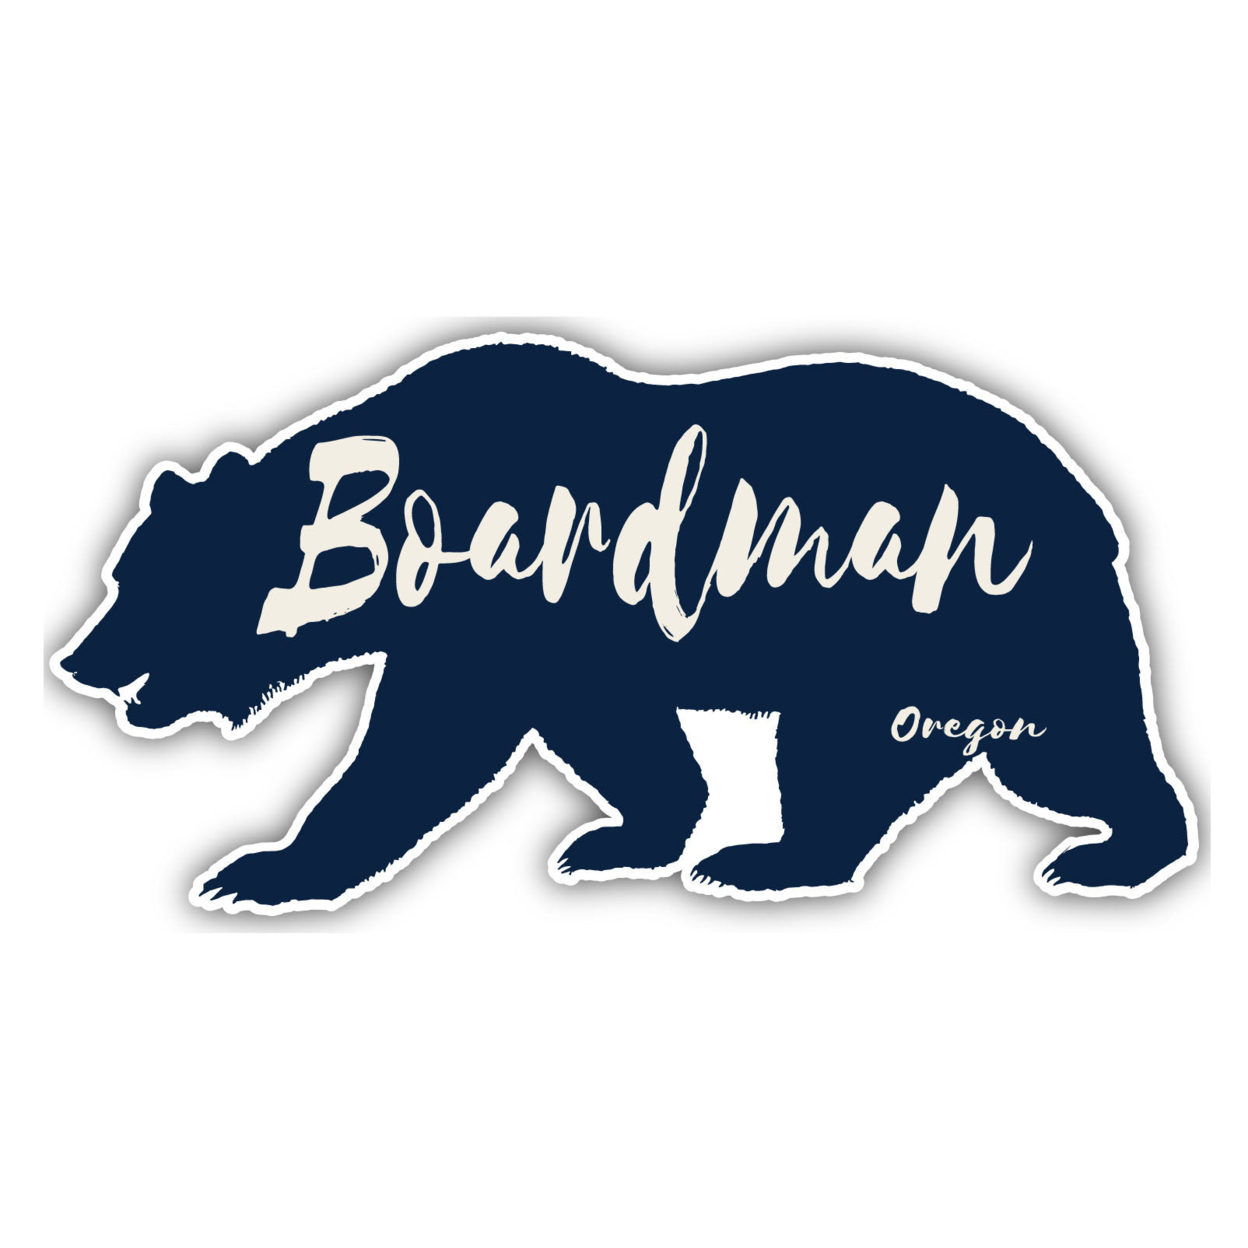 Boardman Oregon Souvenir Decorative Stickers (Choose Theme And Size) - Single Unit, 2-Inch, Camp Life